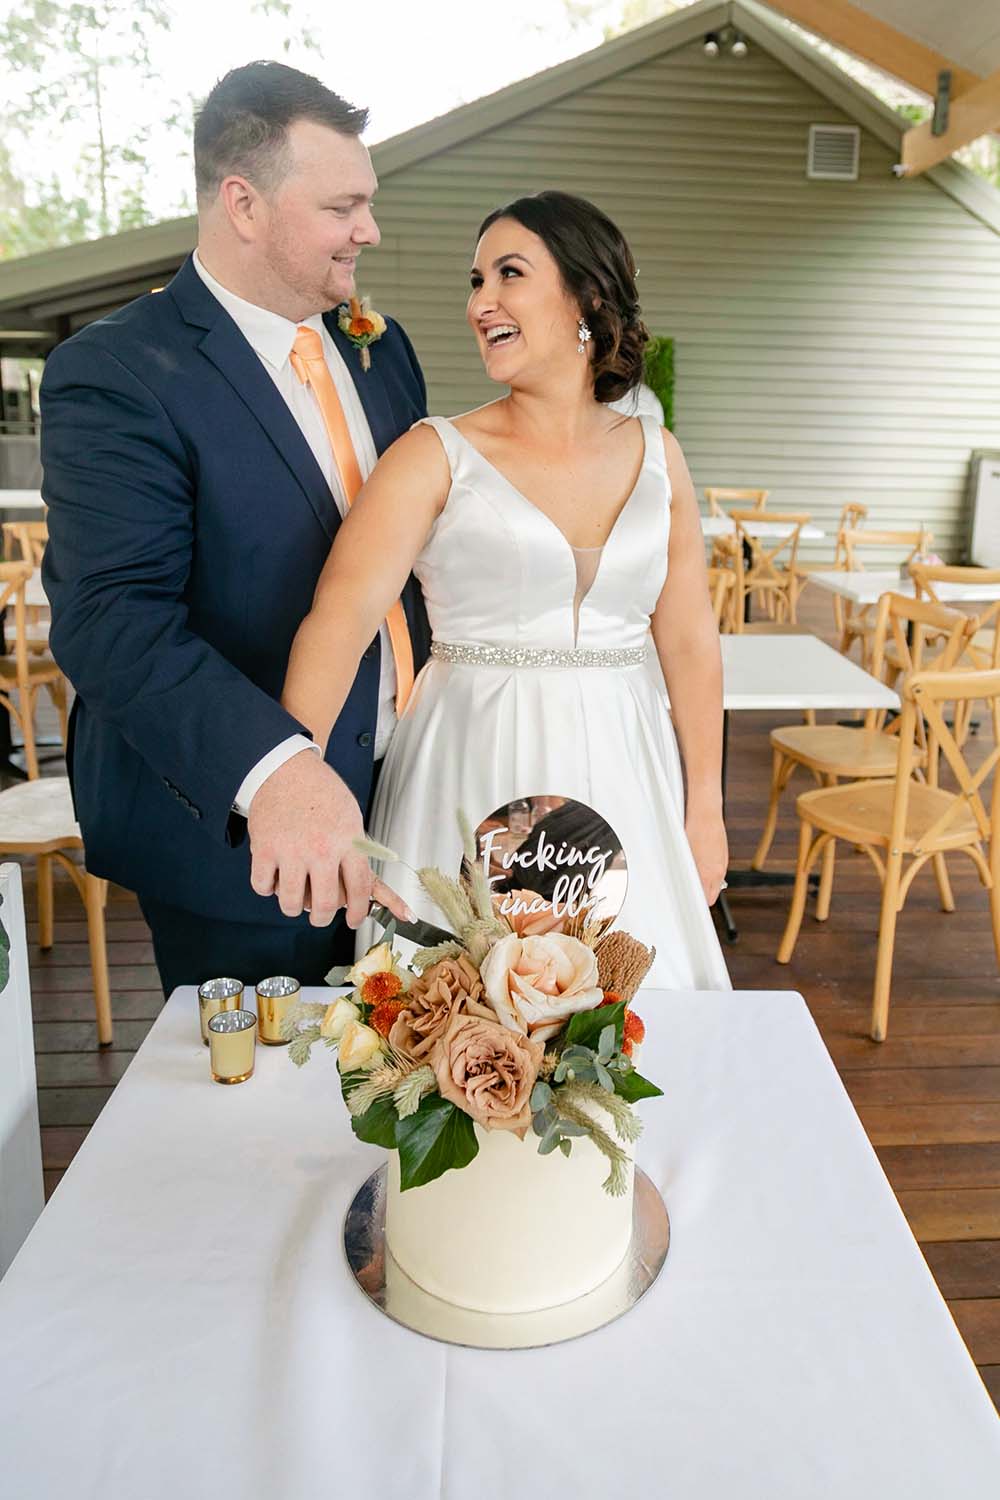 Wedding Photography - cutting the wedding cake